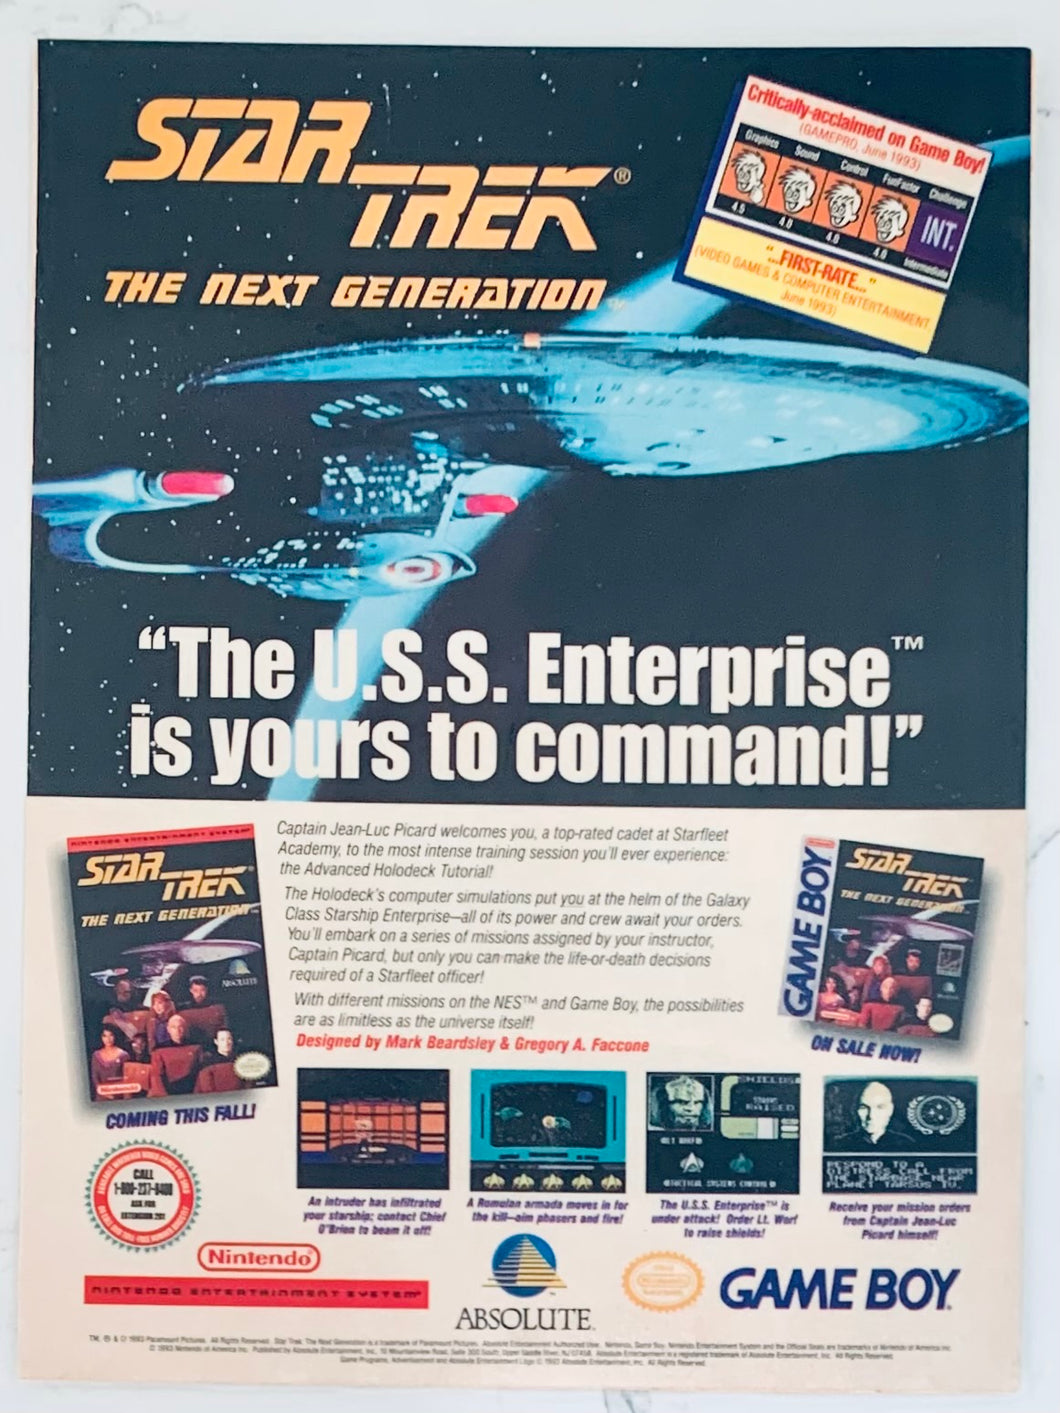 Star Trek: The Next Generation - NES - Original Vintage Advertisement - Print Ads - Laminated A4 Poster